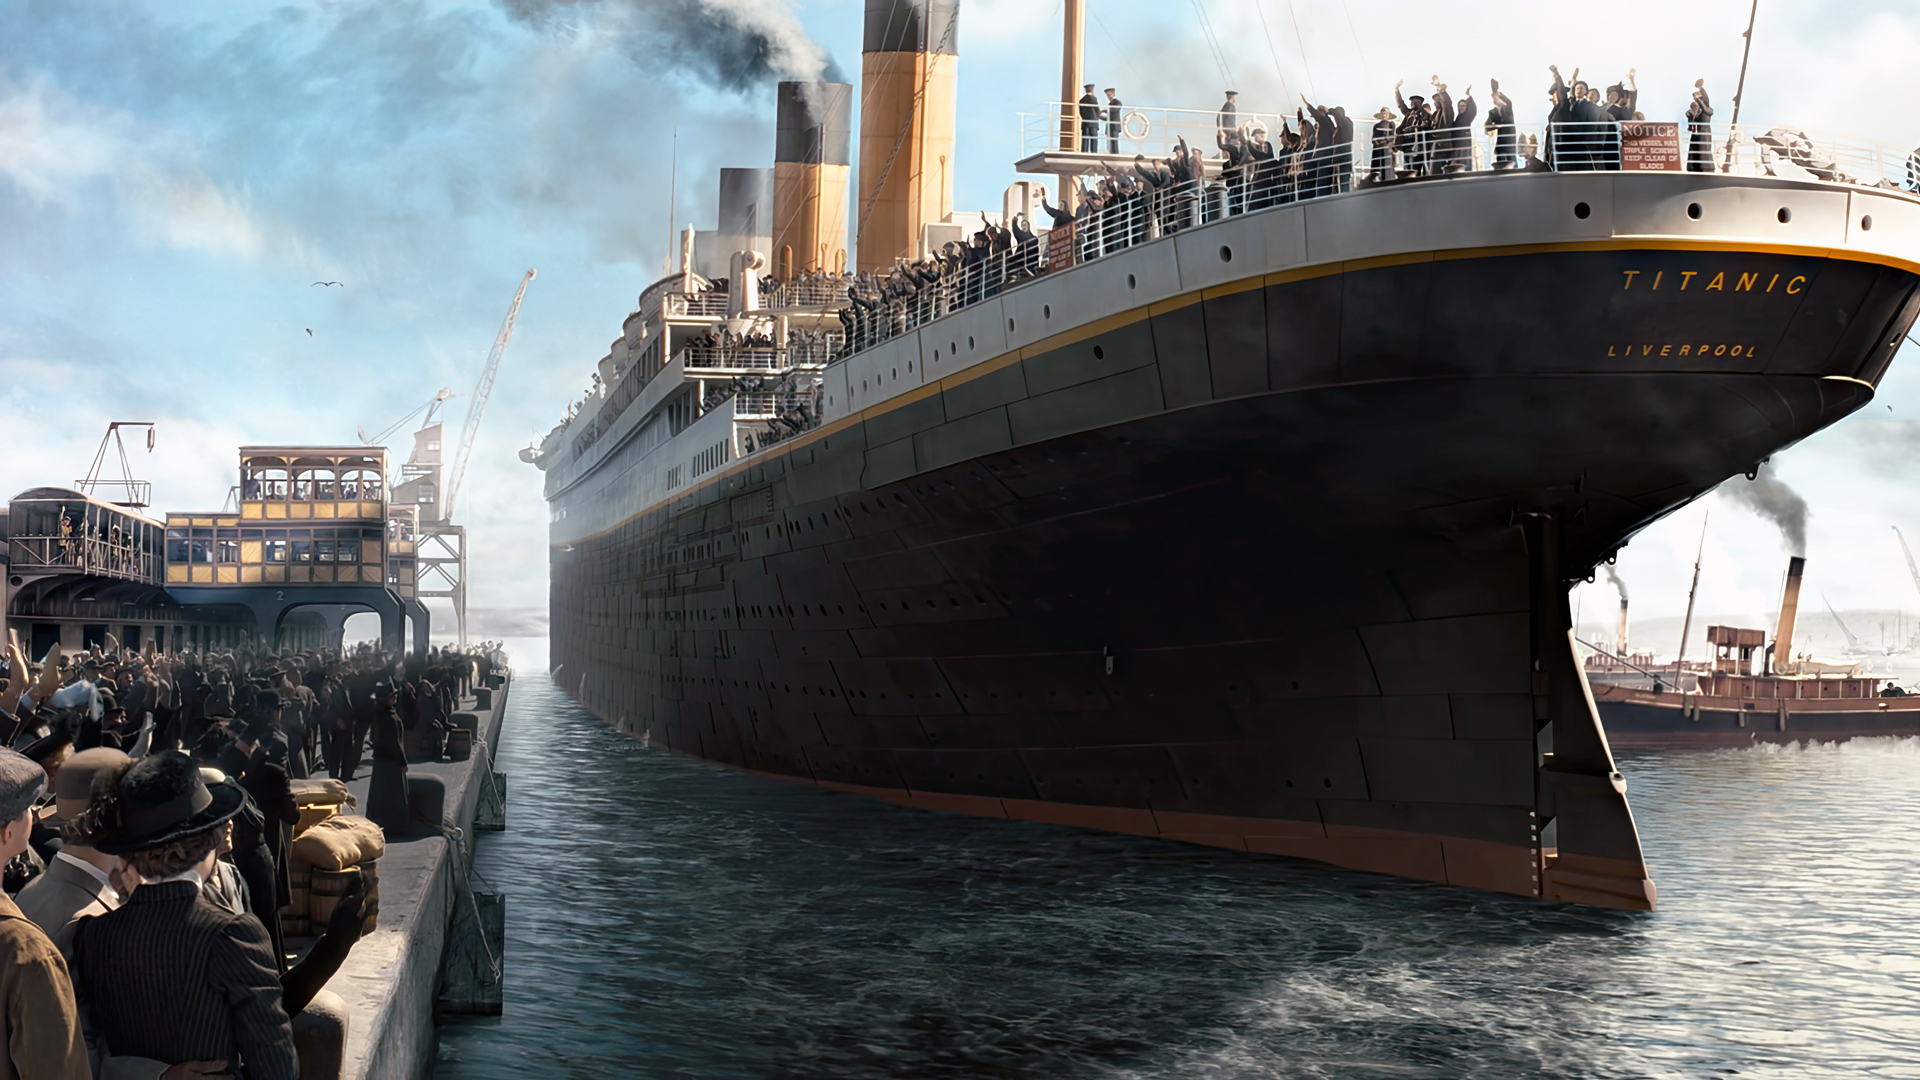 General 1920x1080 Titanic movies film stills James Cameron ship people water berth harbor crowd cranes (machine) Southampton (England) steam ship